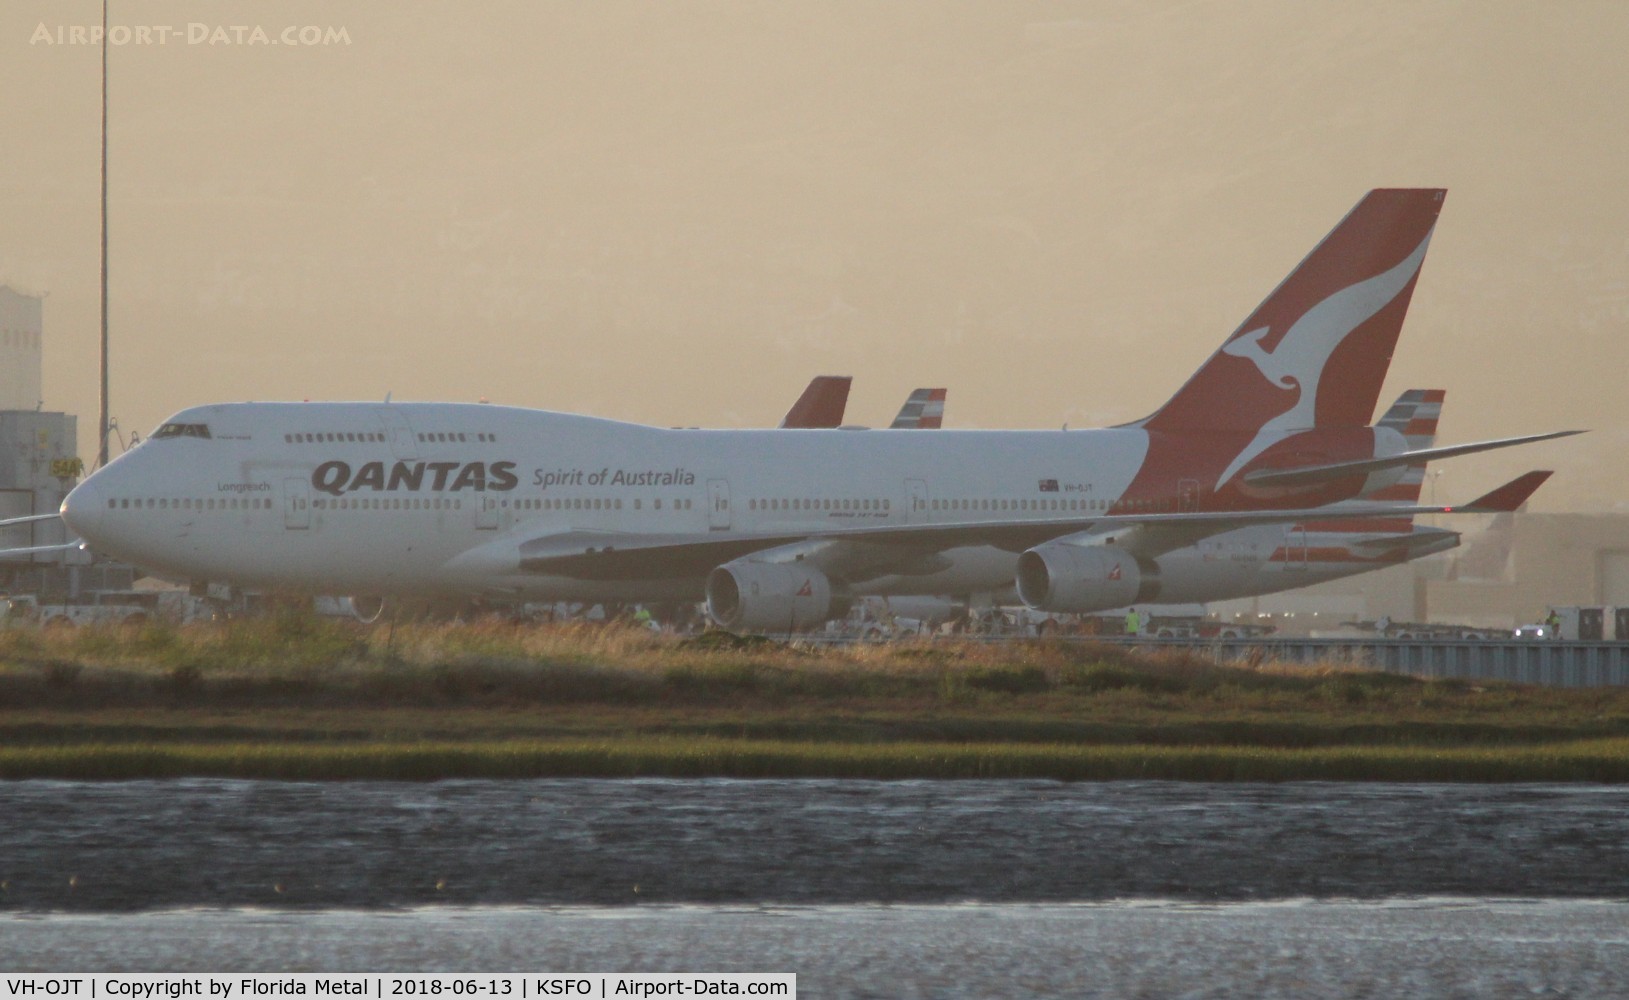 VH-OJT, 1999 Boeing 747-438 C/N 25565, Qantas 747-438